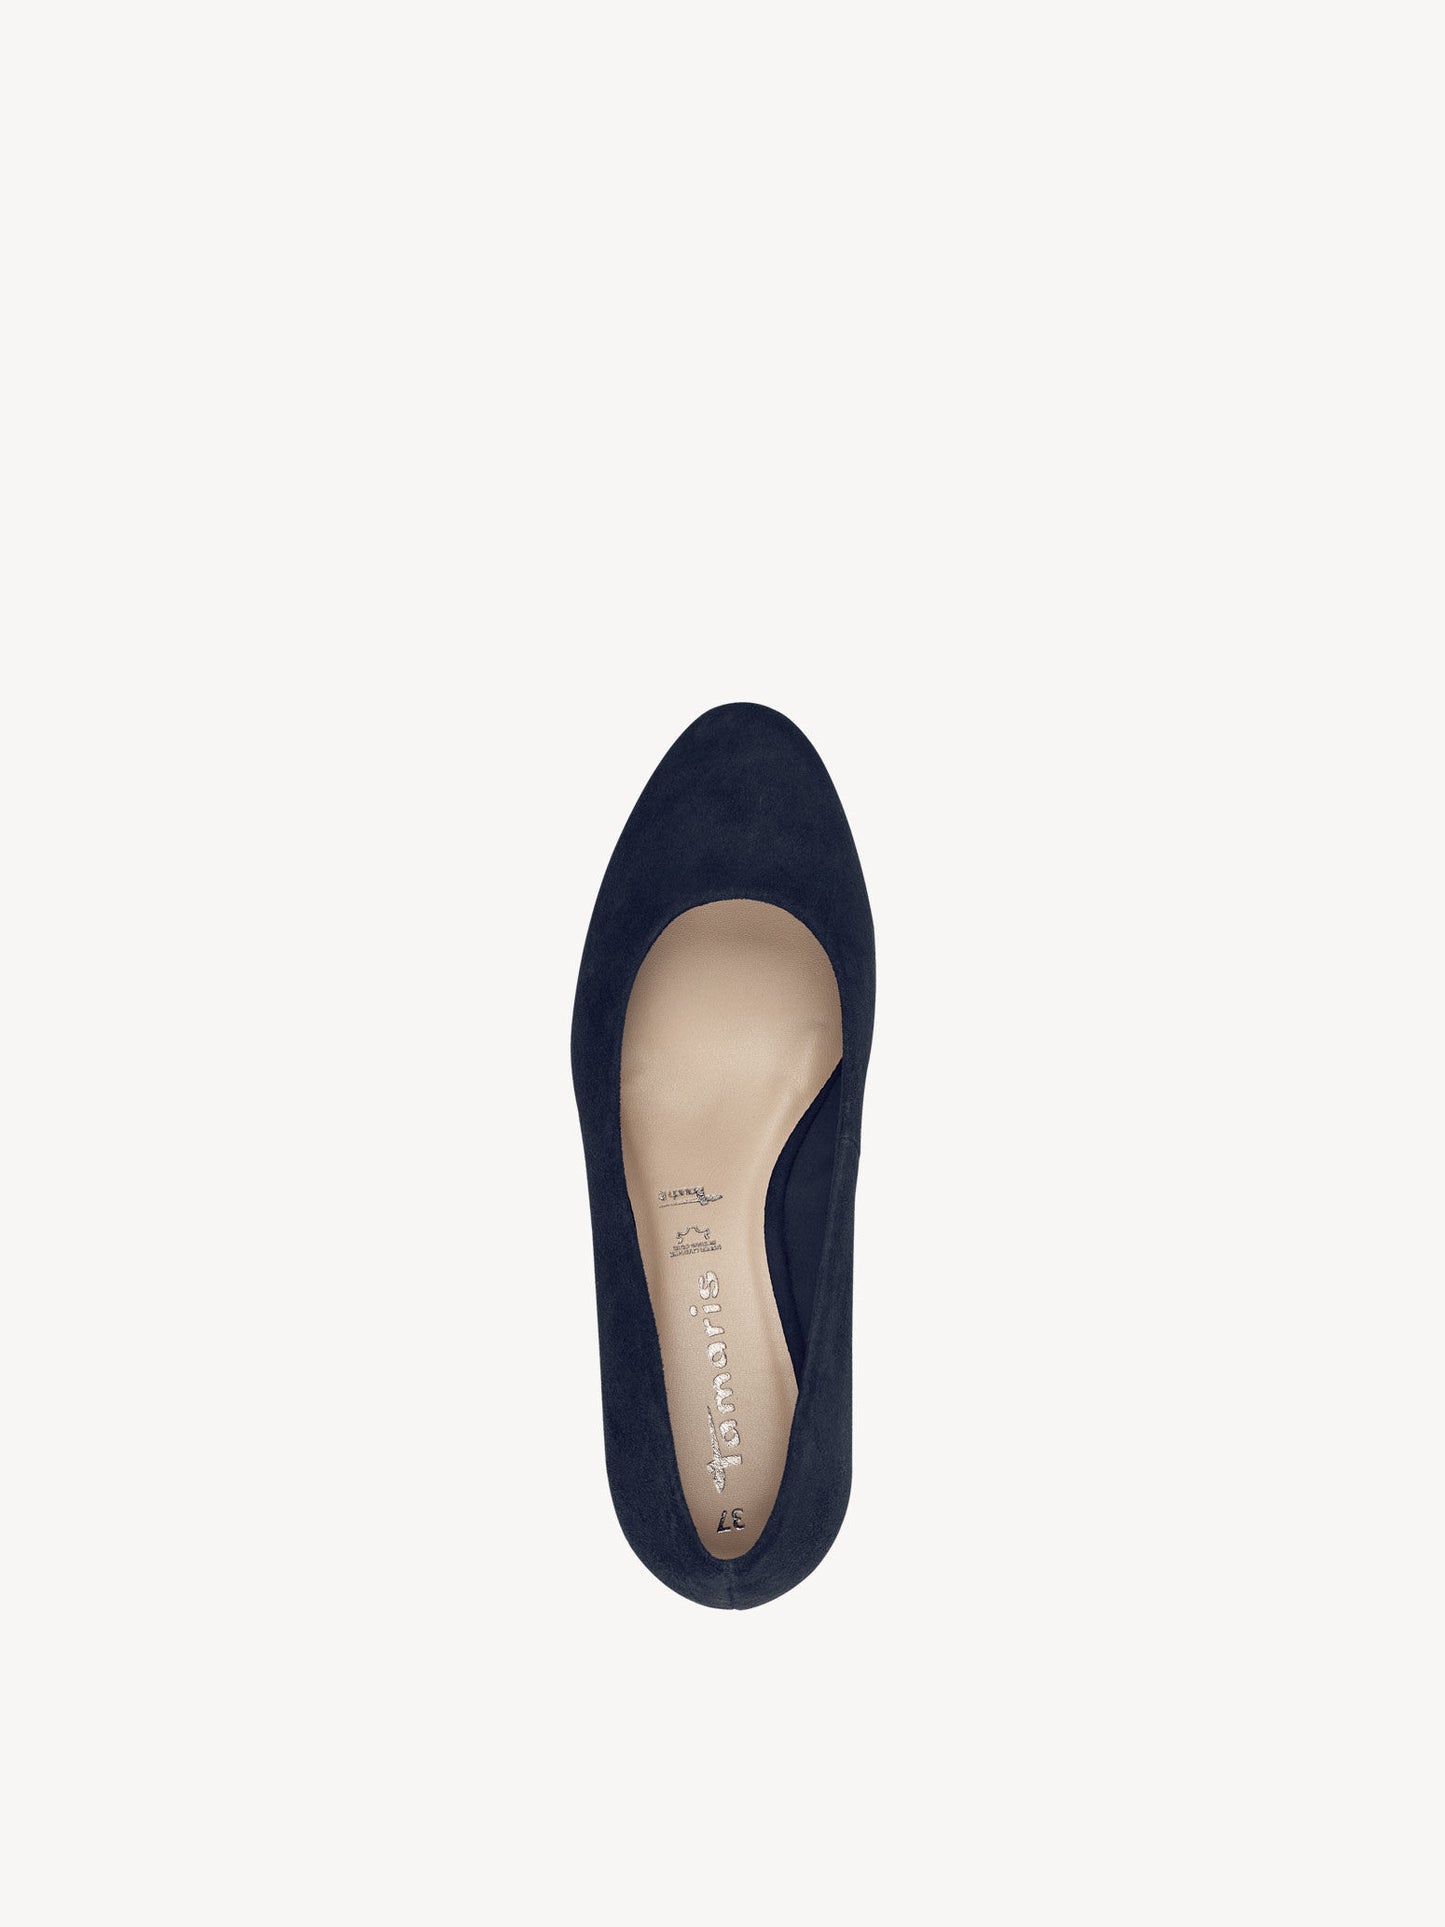 Tamaris Women's 1-22303-42 Leather Wedge Heel Pump Shoes Navy Blue